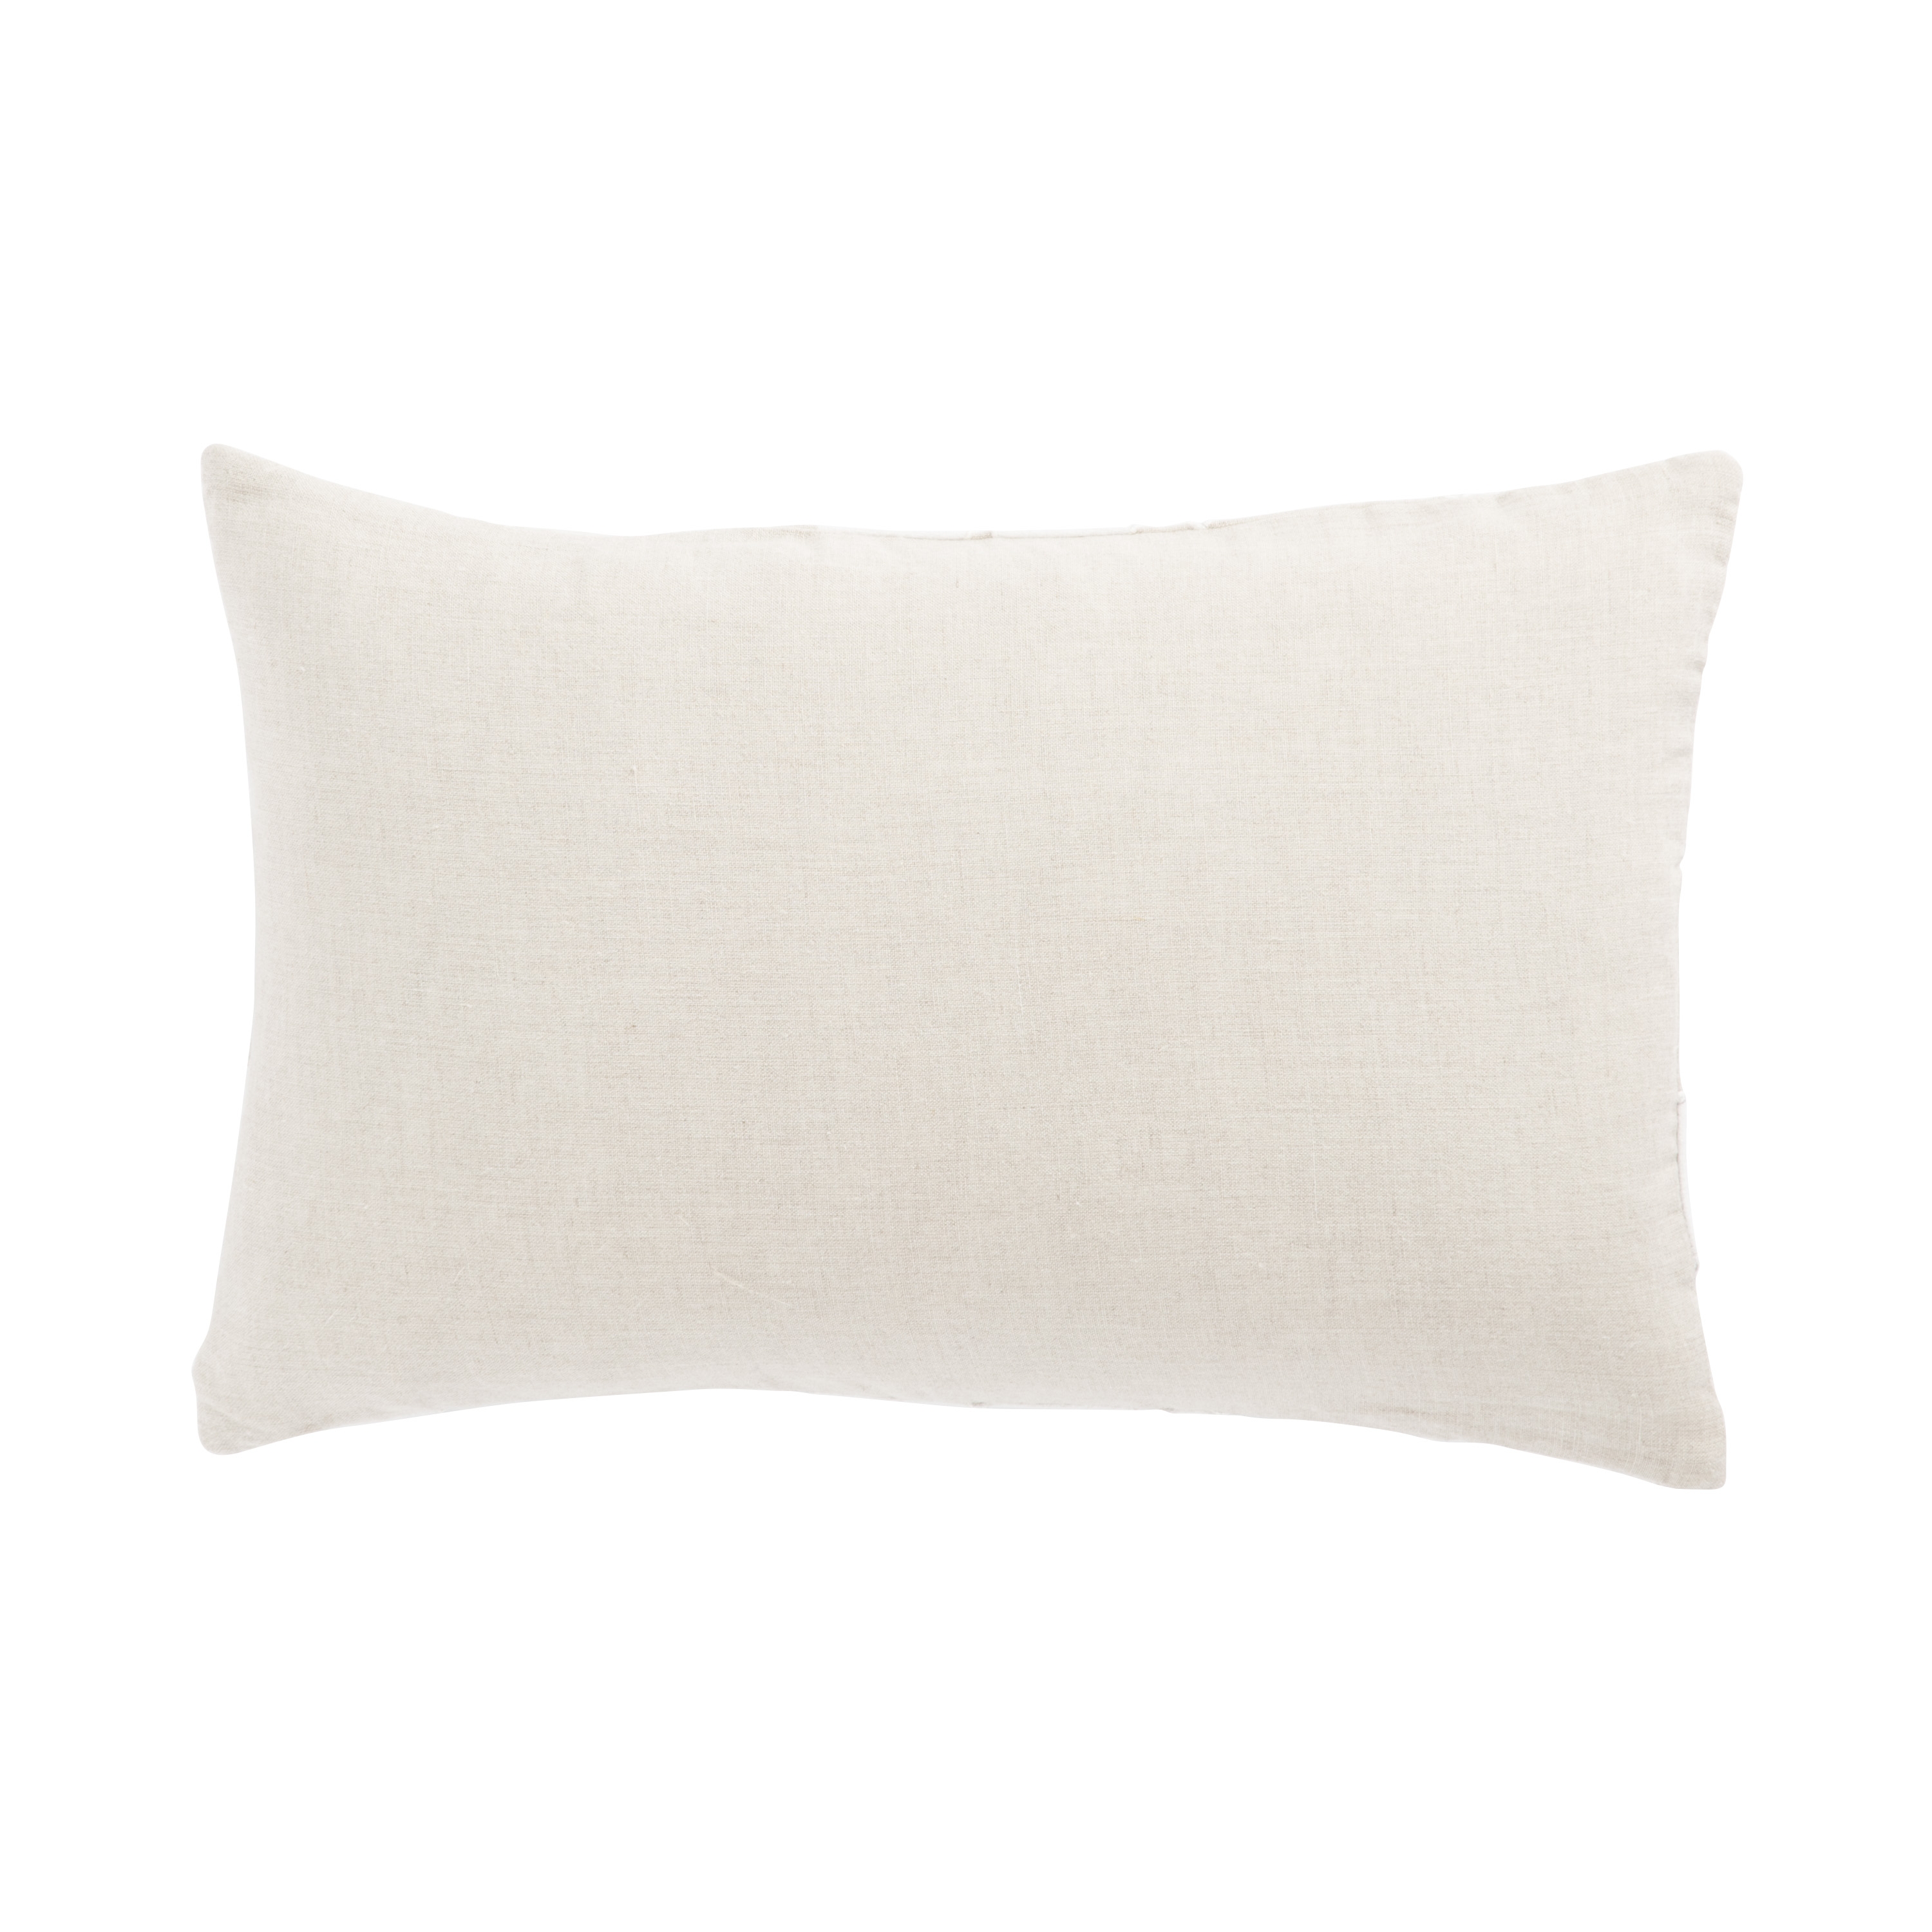 COSMIC - CNK47 LUMBAR White 16"X24" Pillow - Image 1